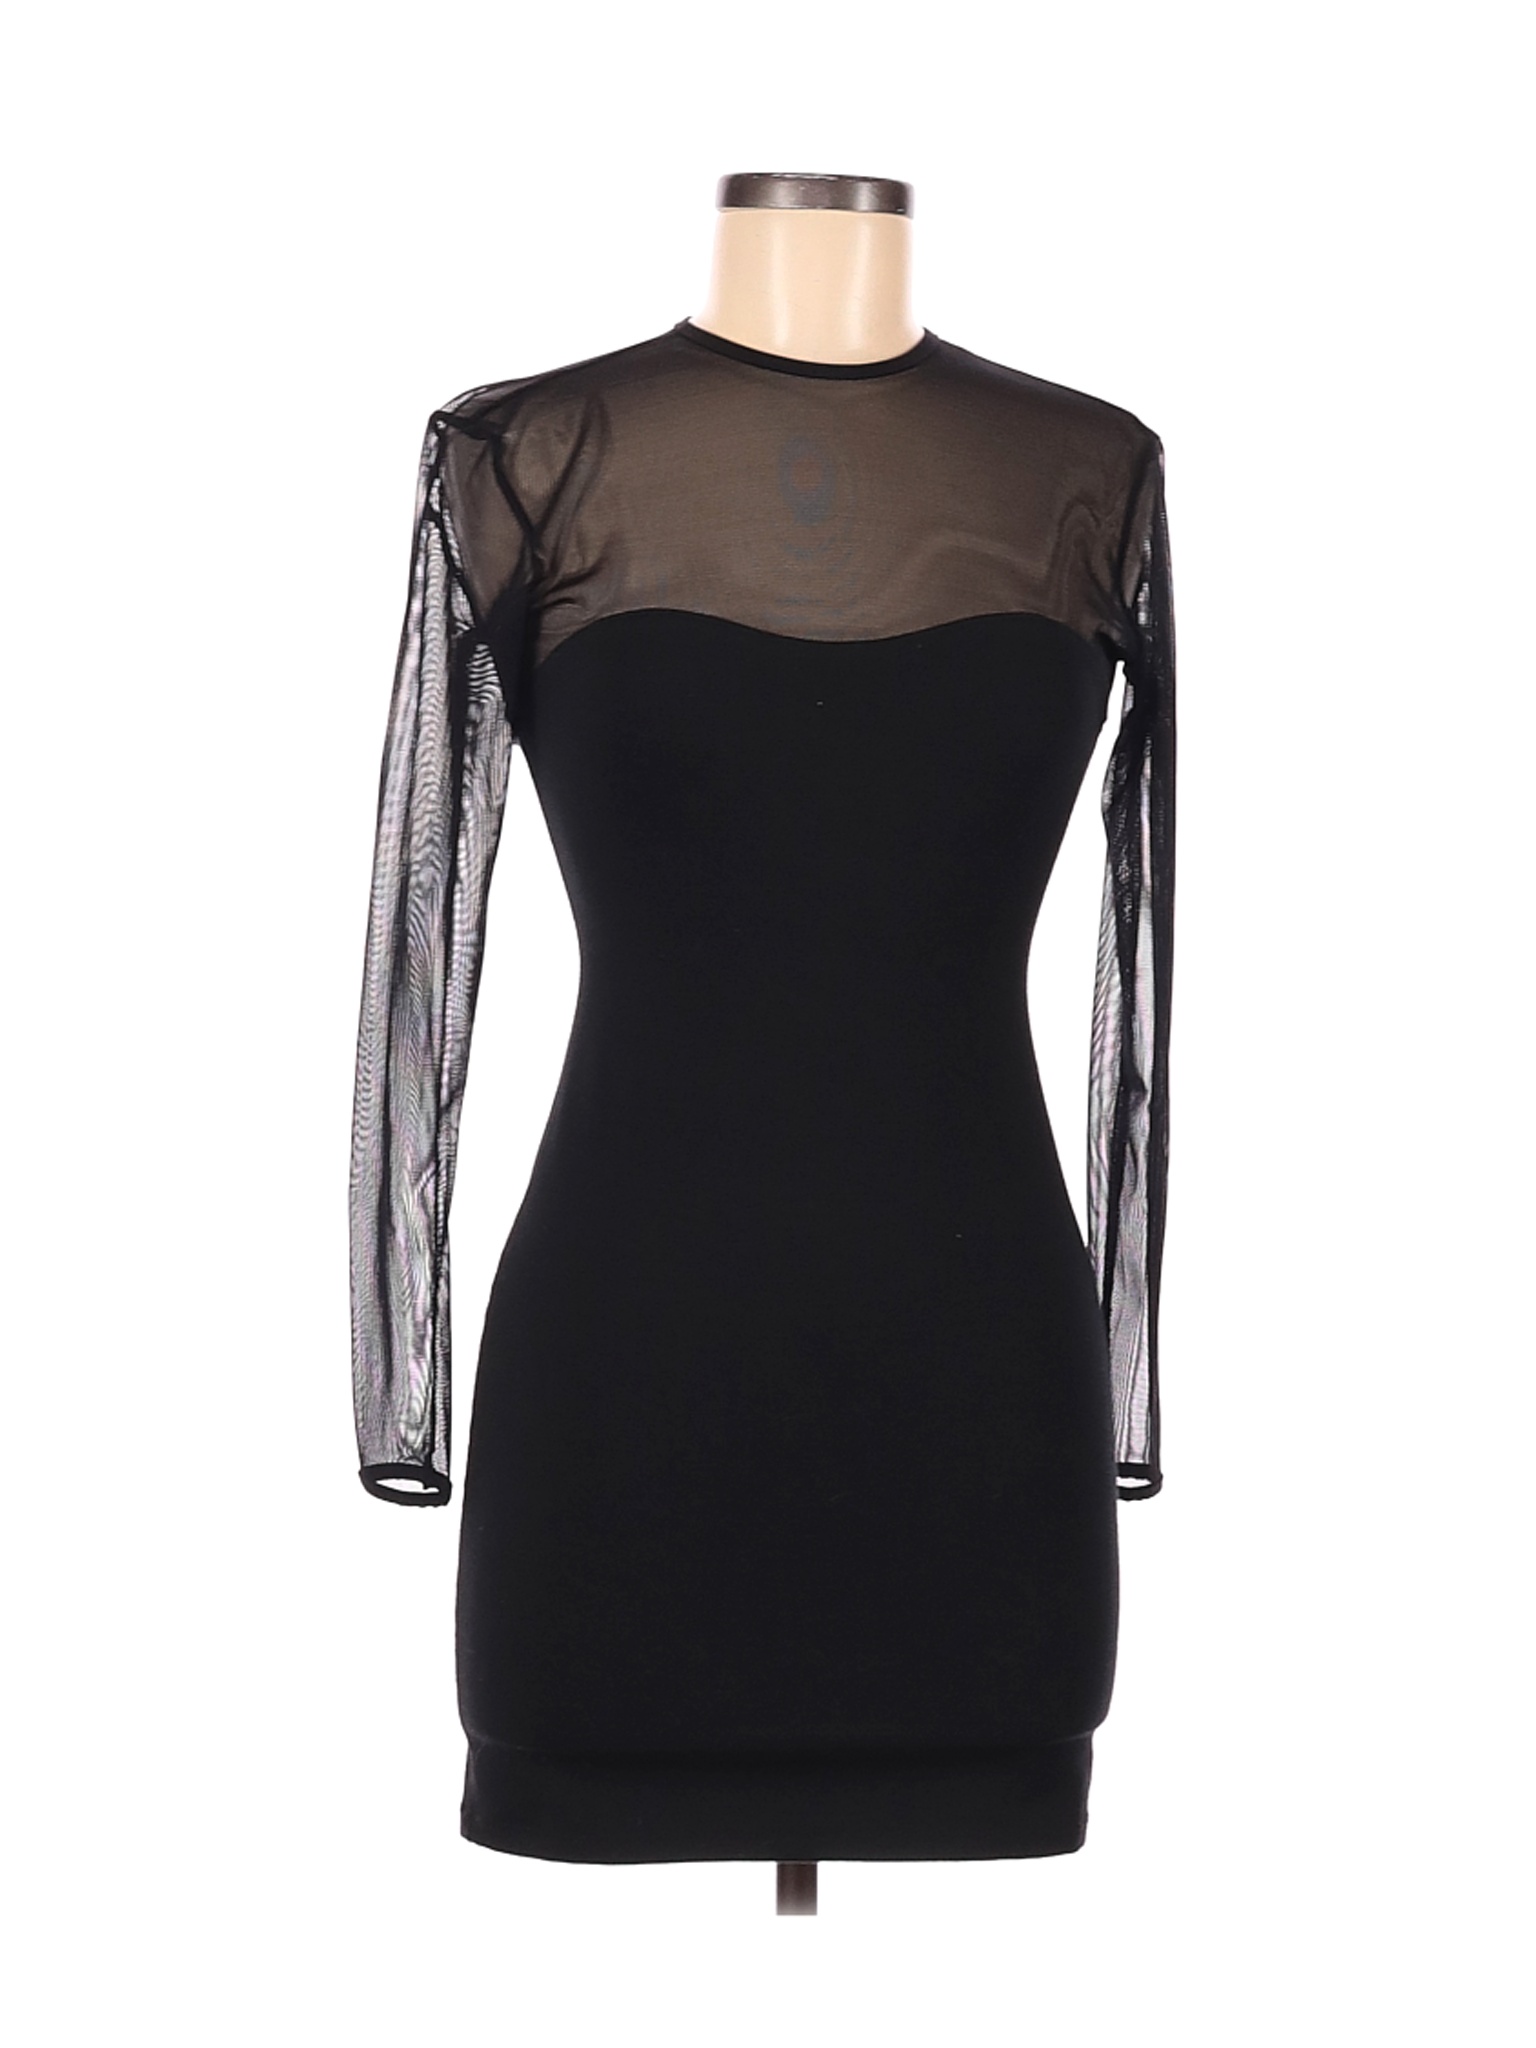 Carabella Collection Women Black Cocktail Dress S | eBay